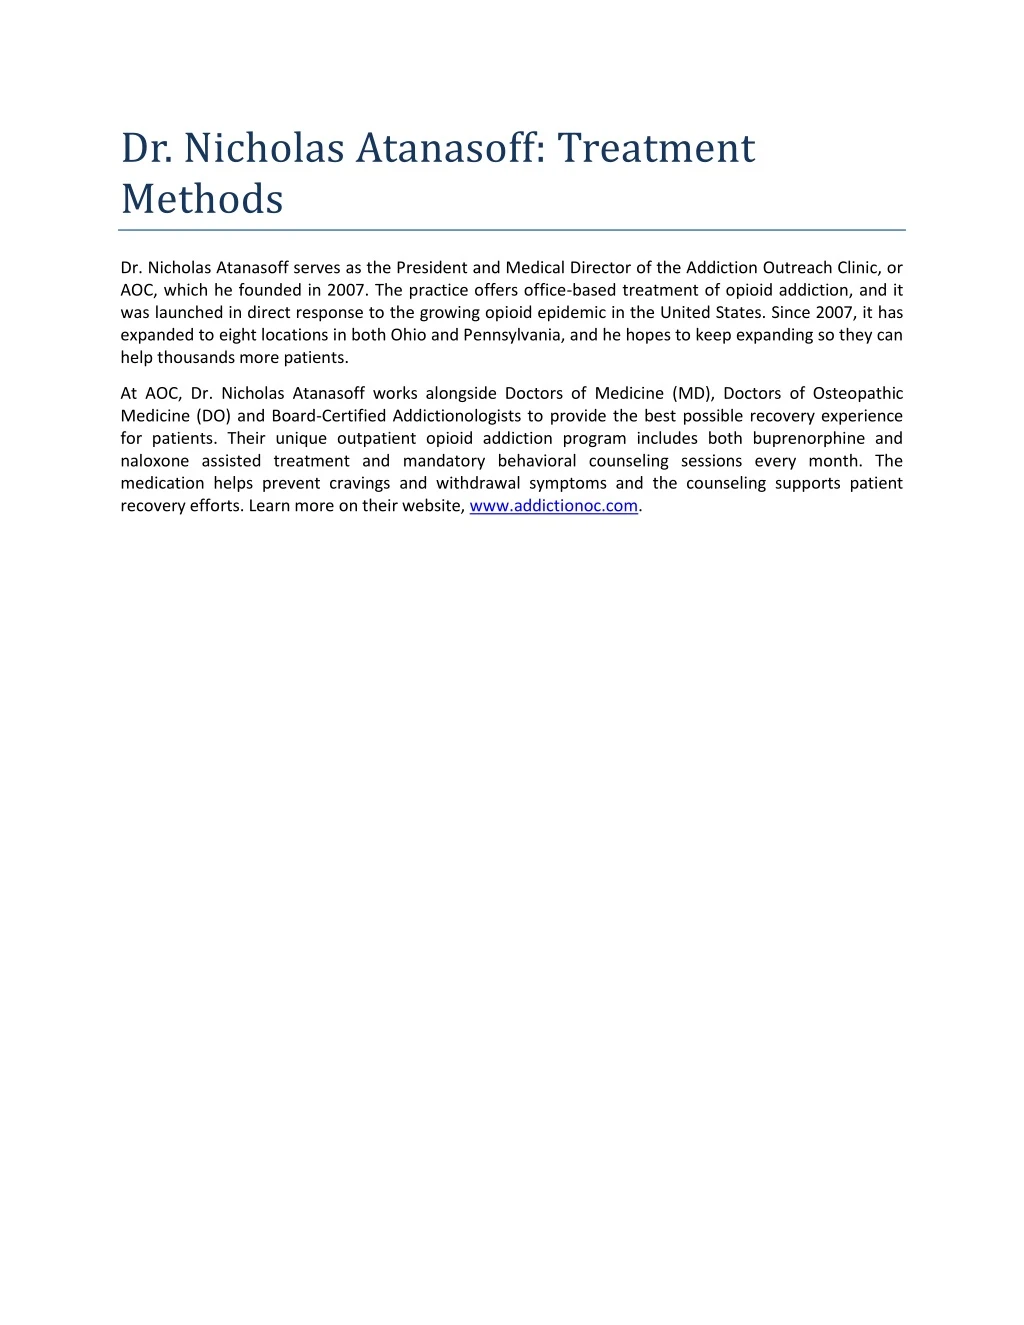 dr nicholas atanasoff treatment methods